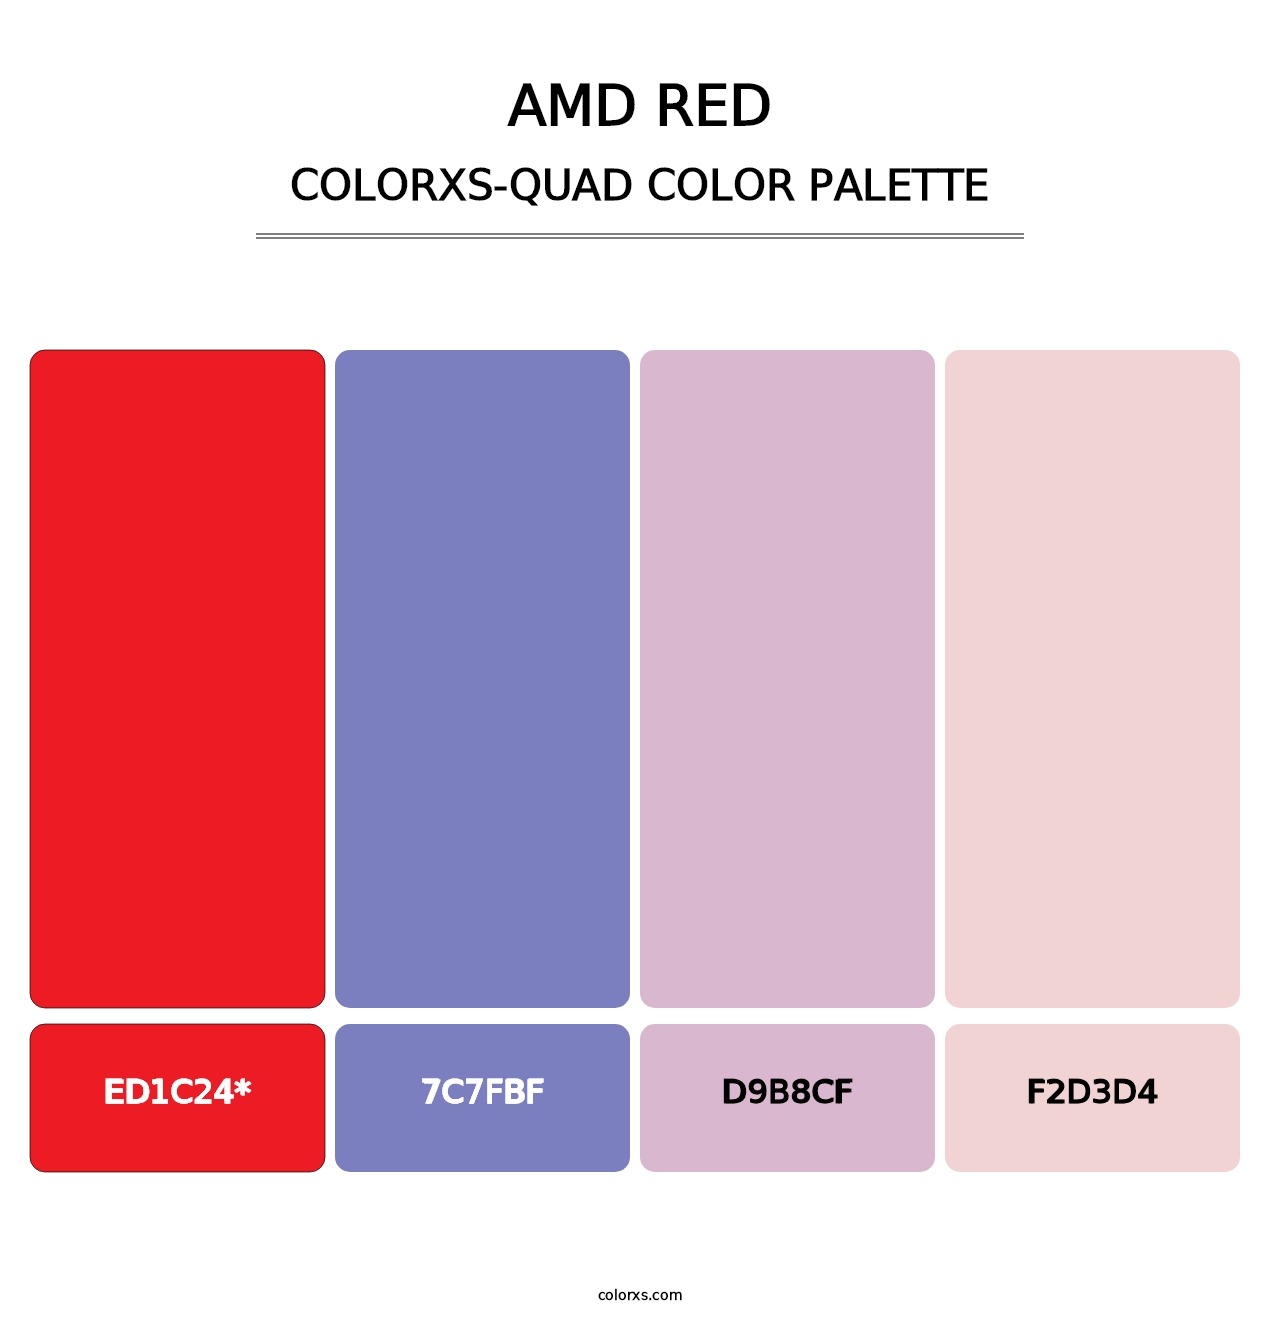 AMD Red - Colorxs Quad Palette